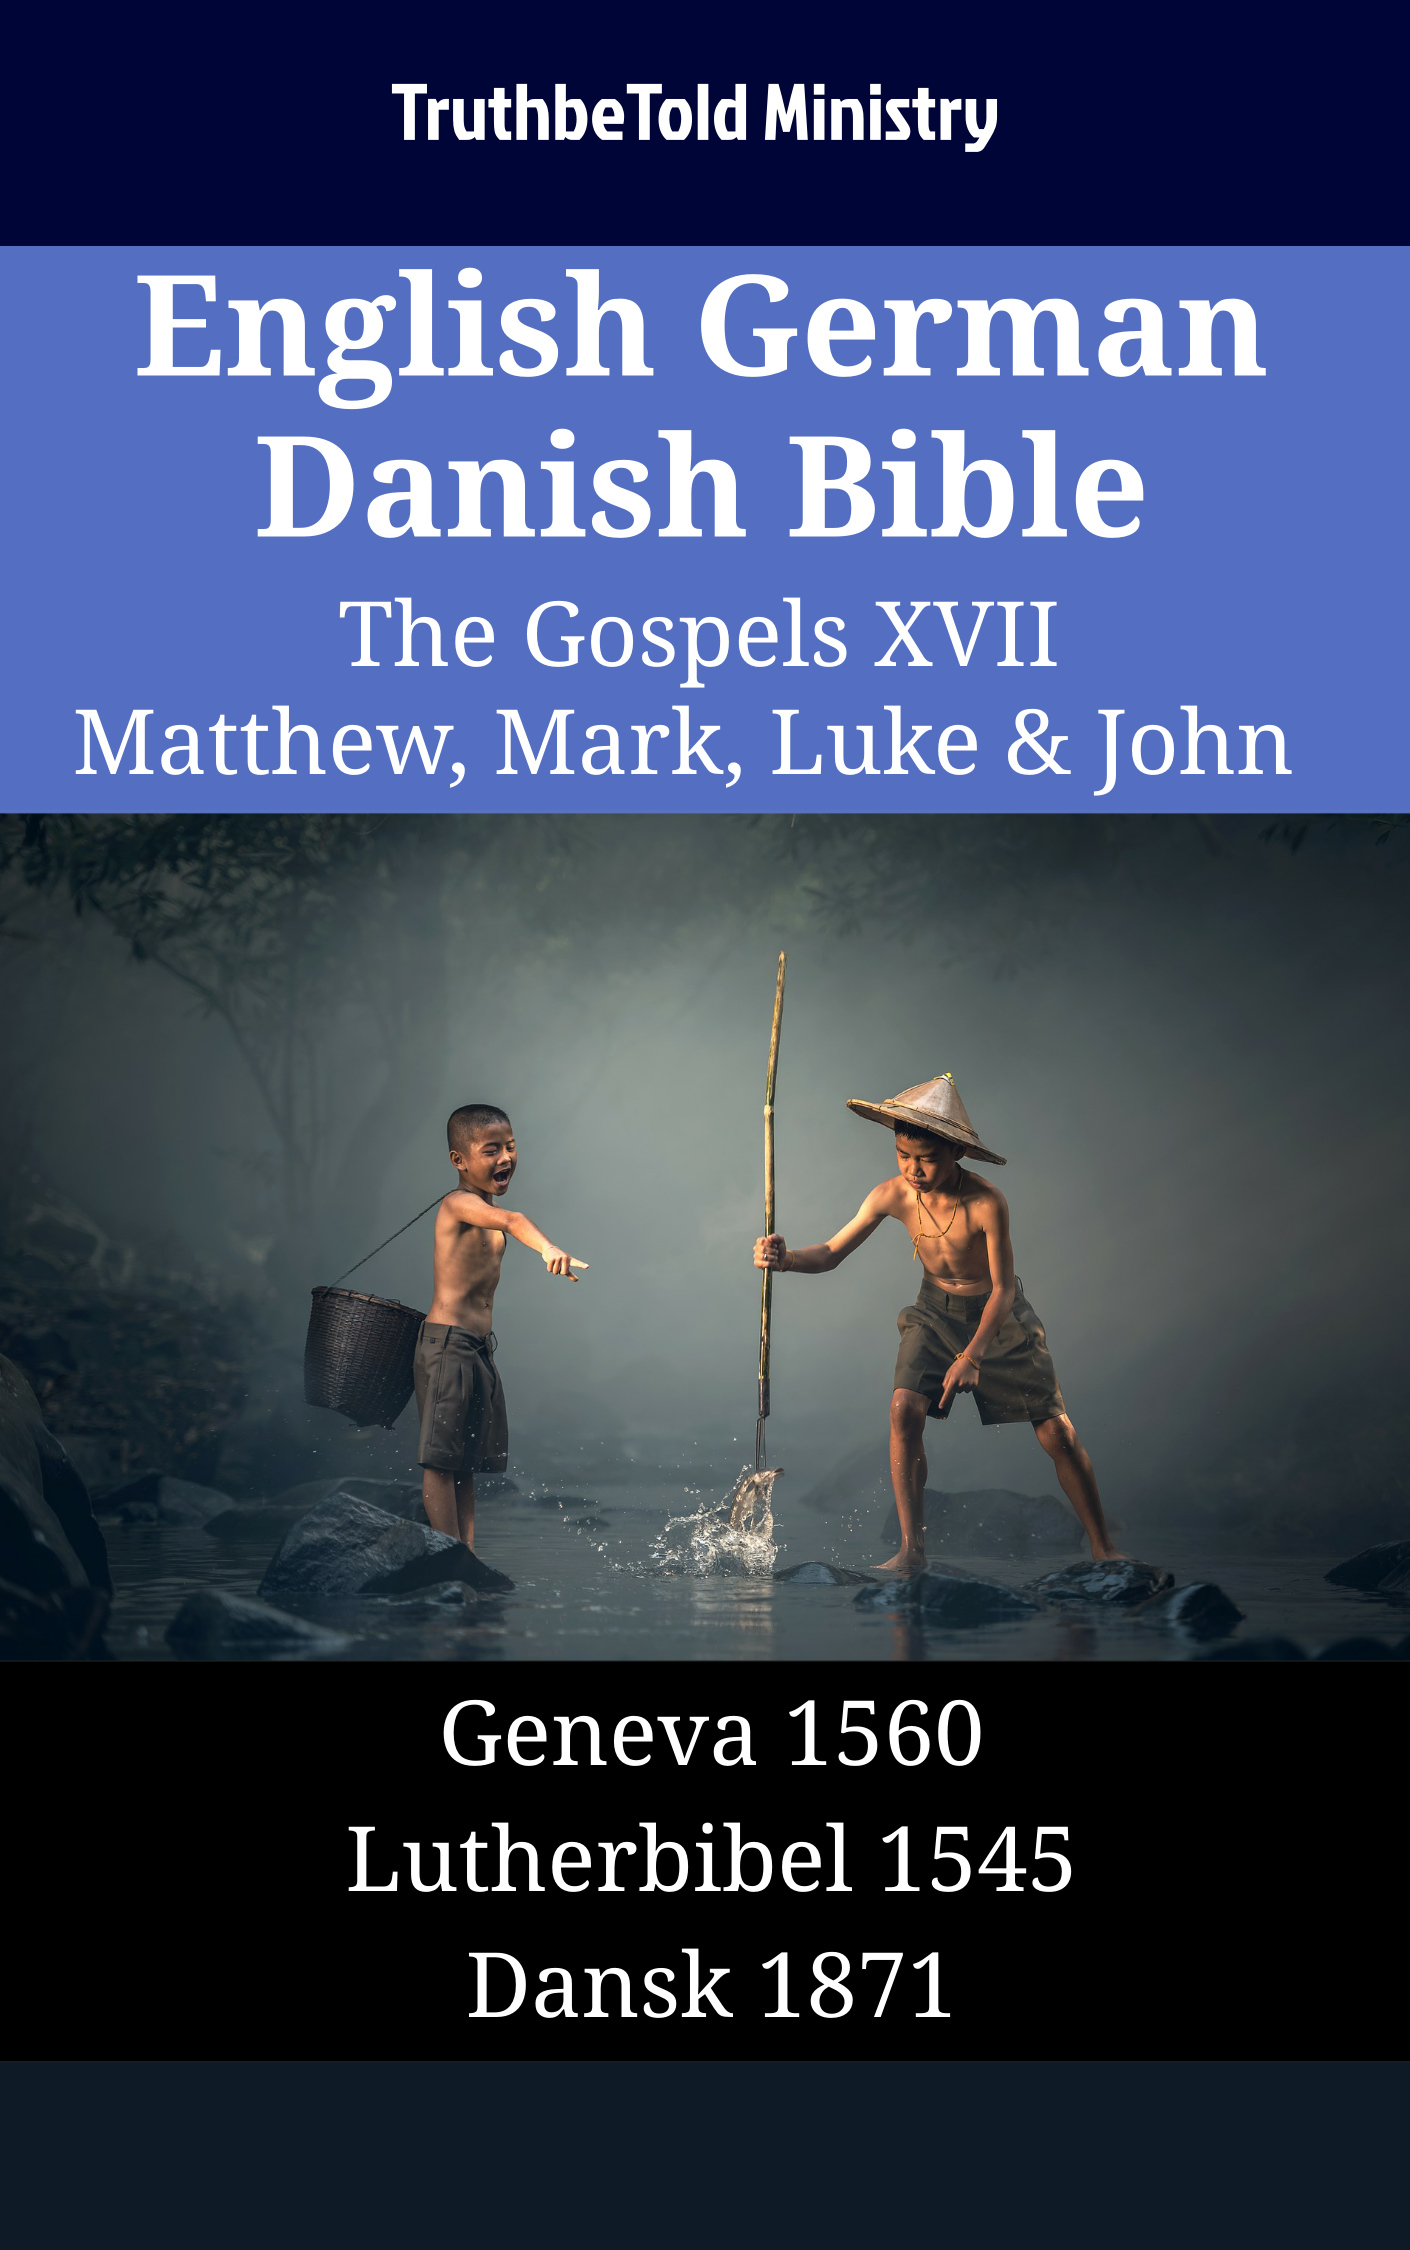 English German Danish Bible - The Gospels XVII - Matthew, Mark, Luke & John